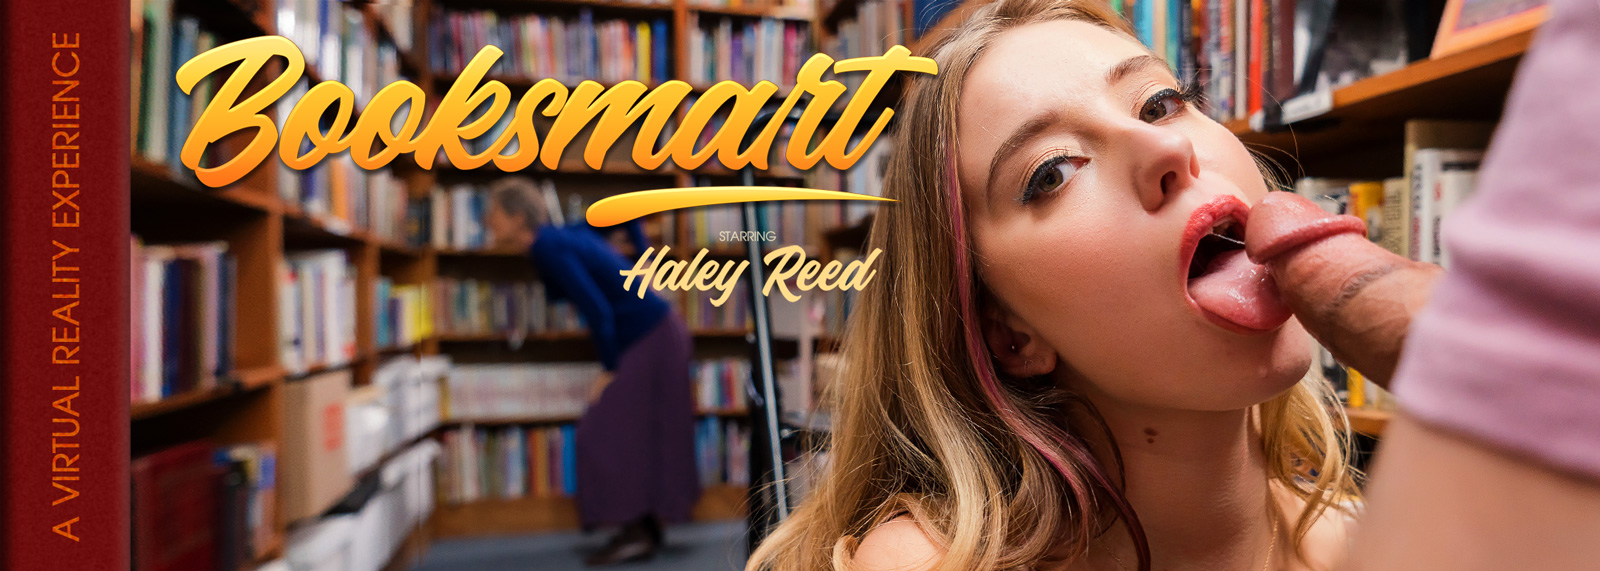 Booksmart with Haley Reed  Slideshow